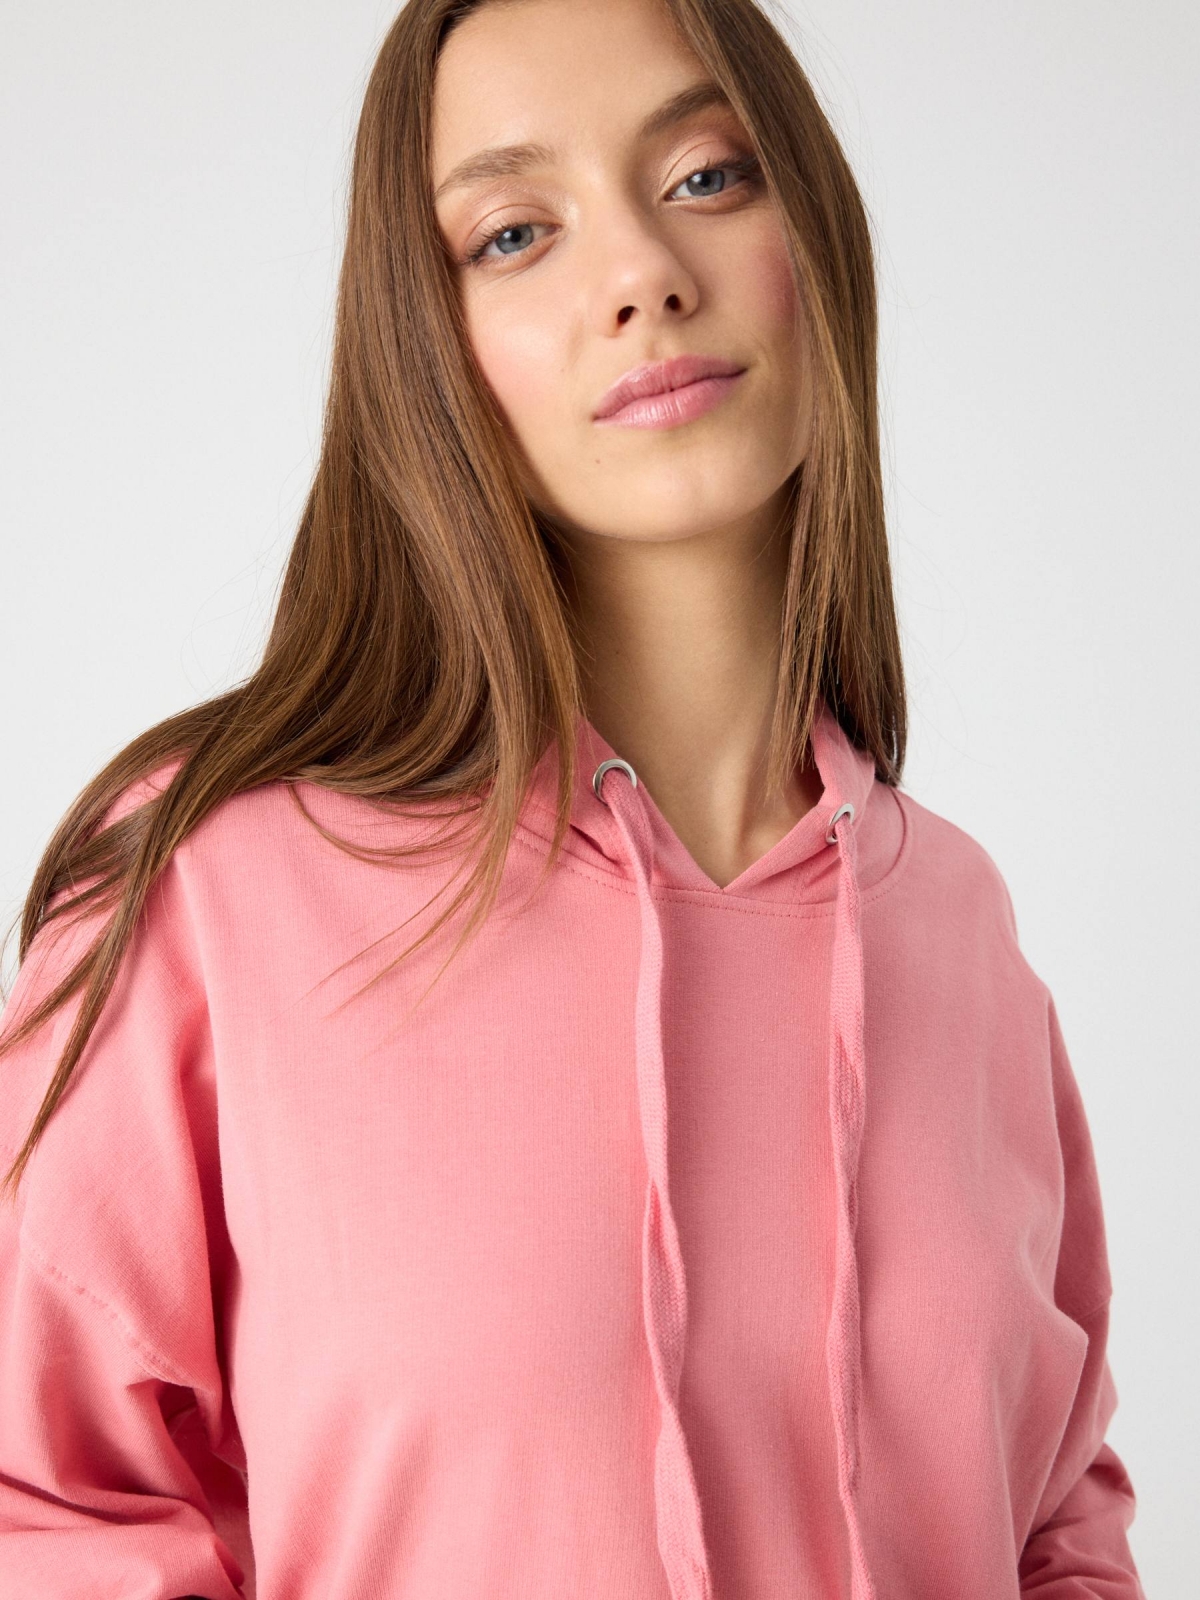 Sudadera básica capucha rosa claro primer plano